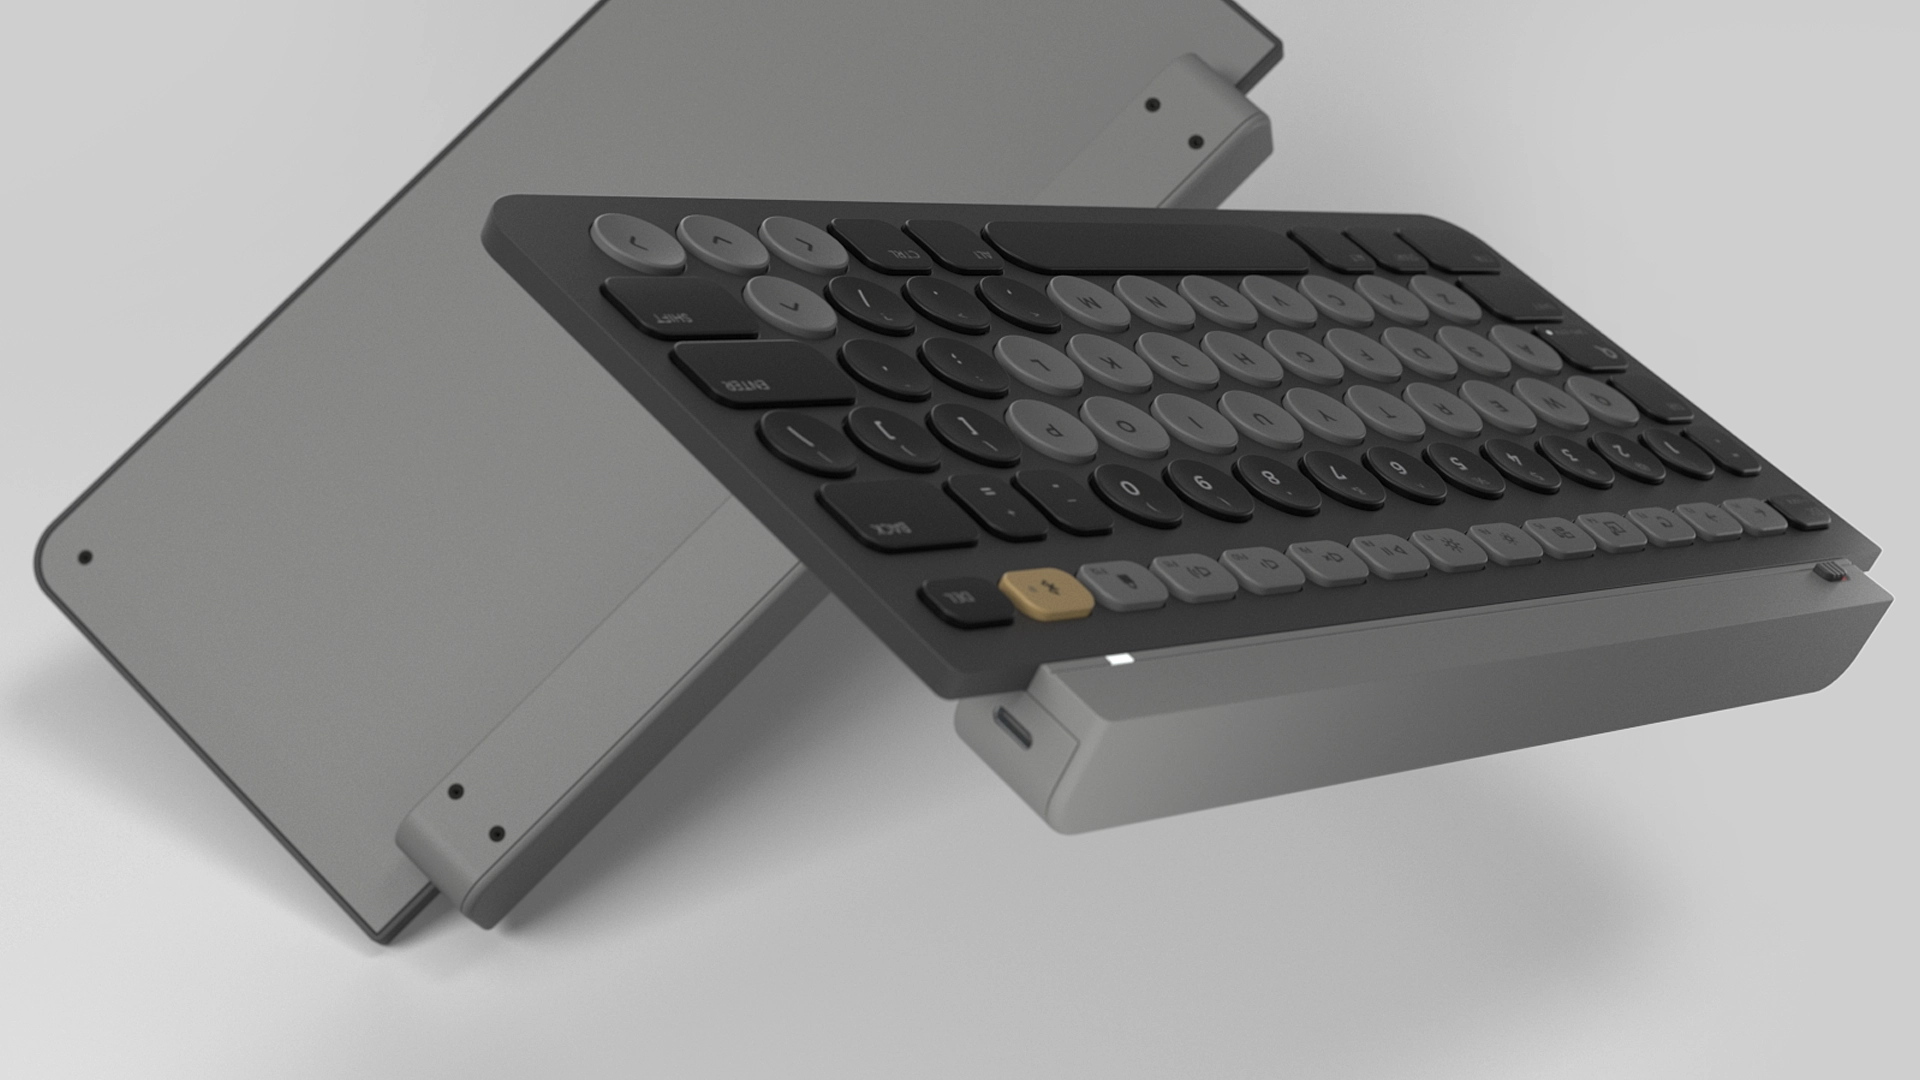 Rugged Bluetooth keyboard, USB-C charging port